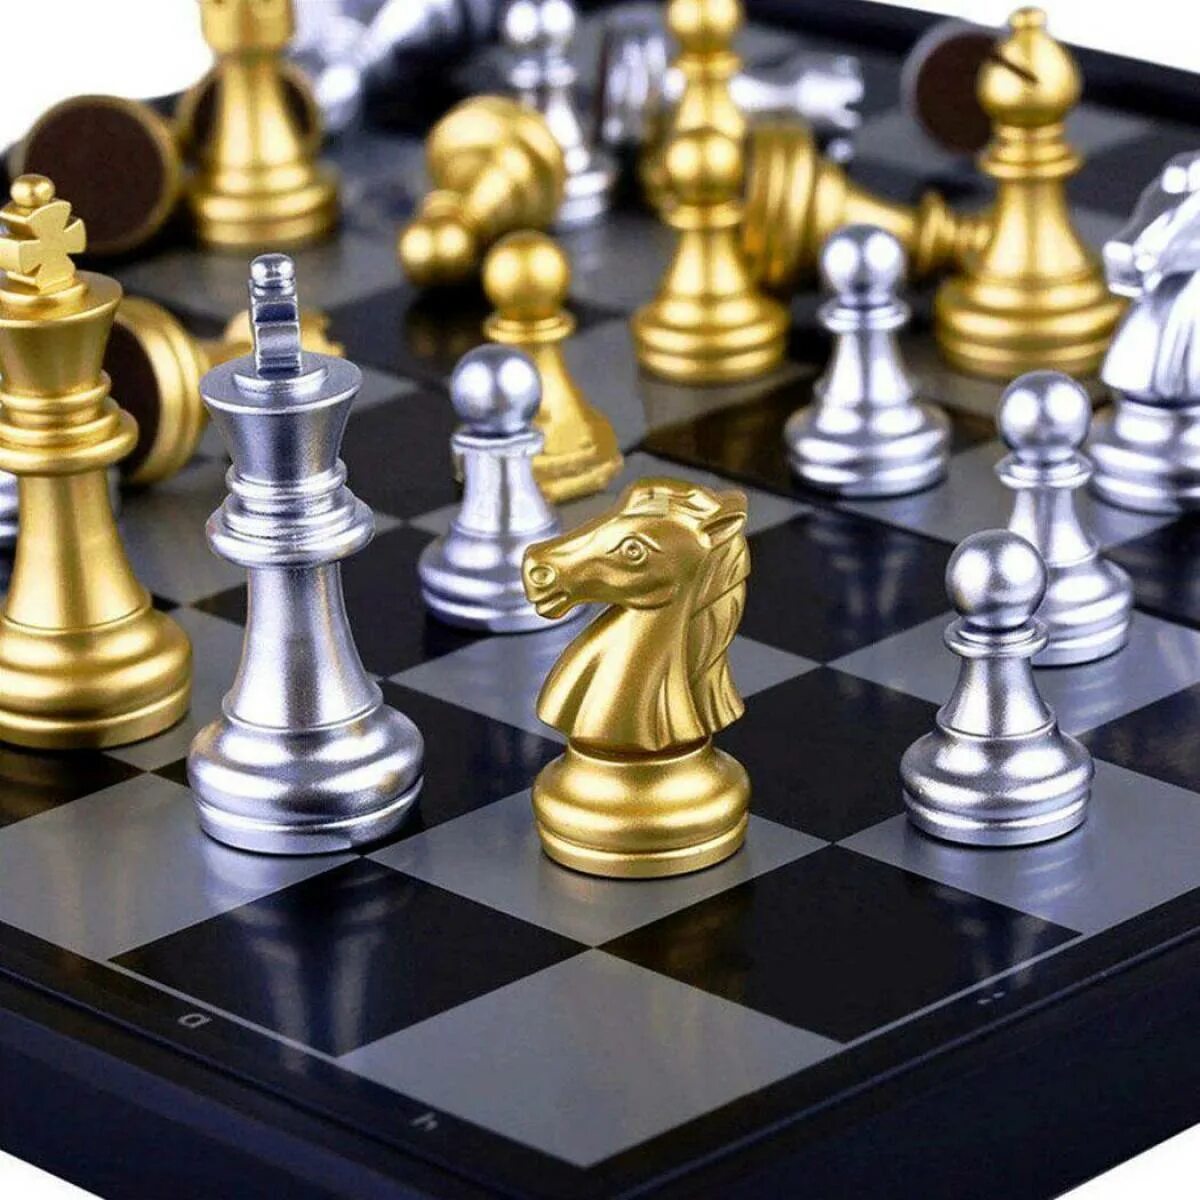 О шахмате. Shaxmat Shashka. Шахматы красивые. Красивые шахматные фигуры. Красивая шахматная доска.